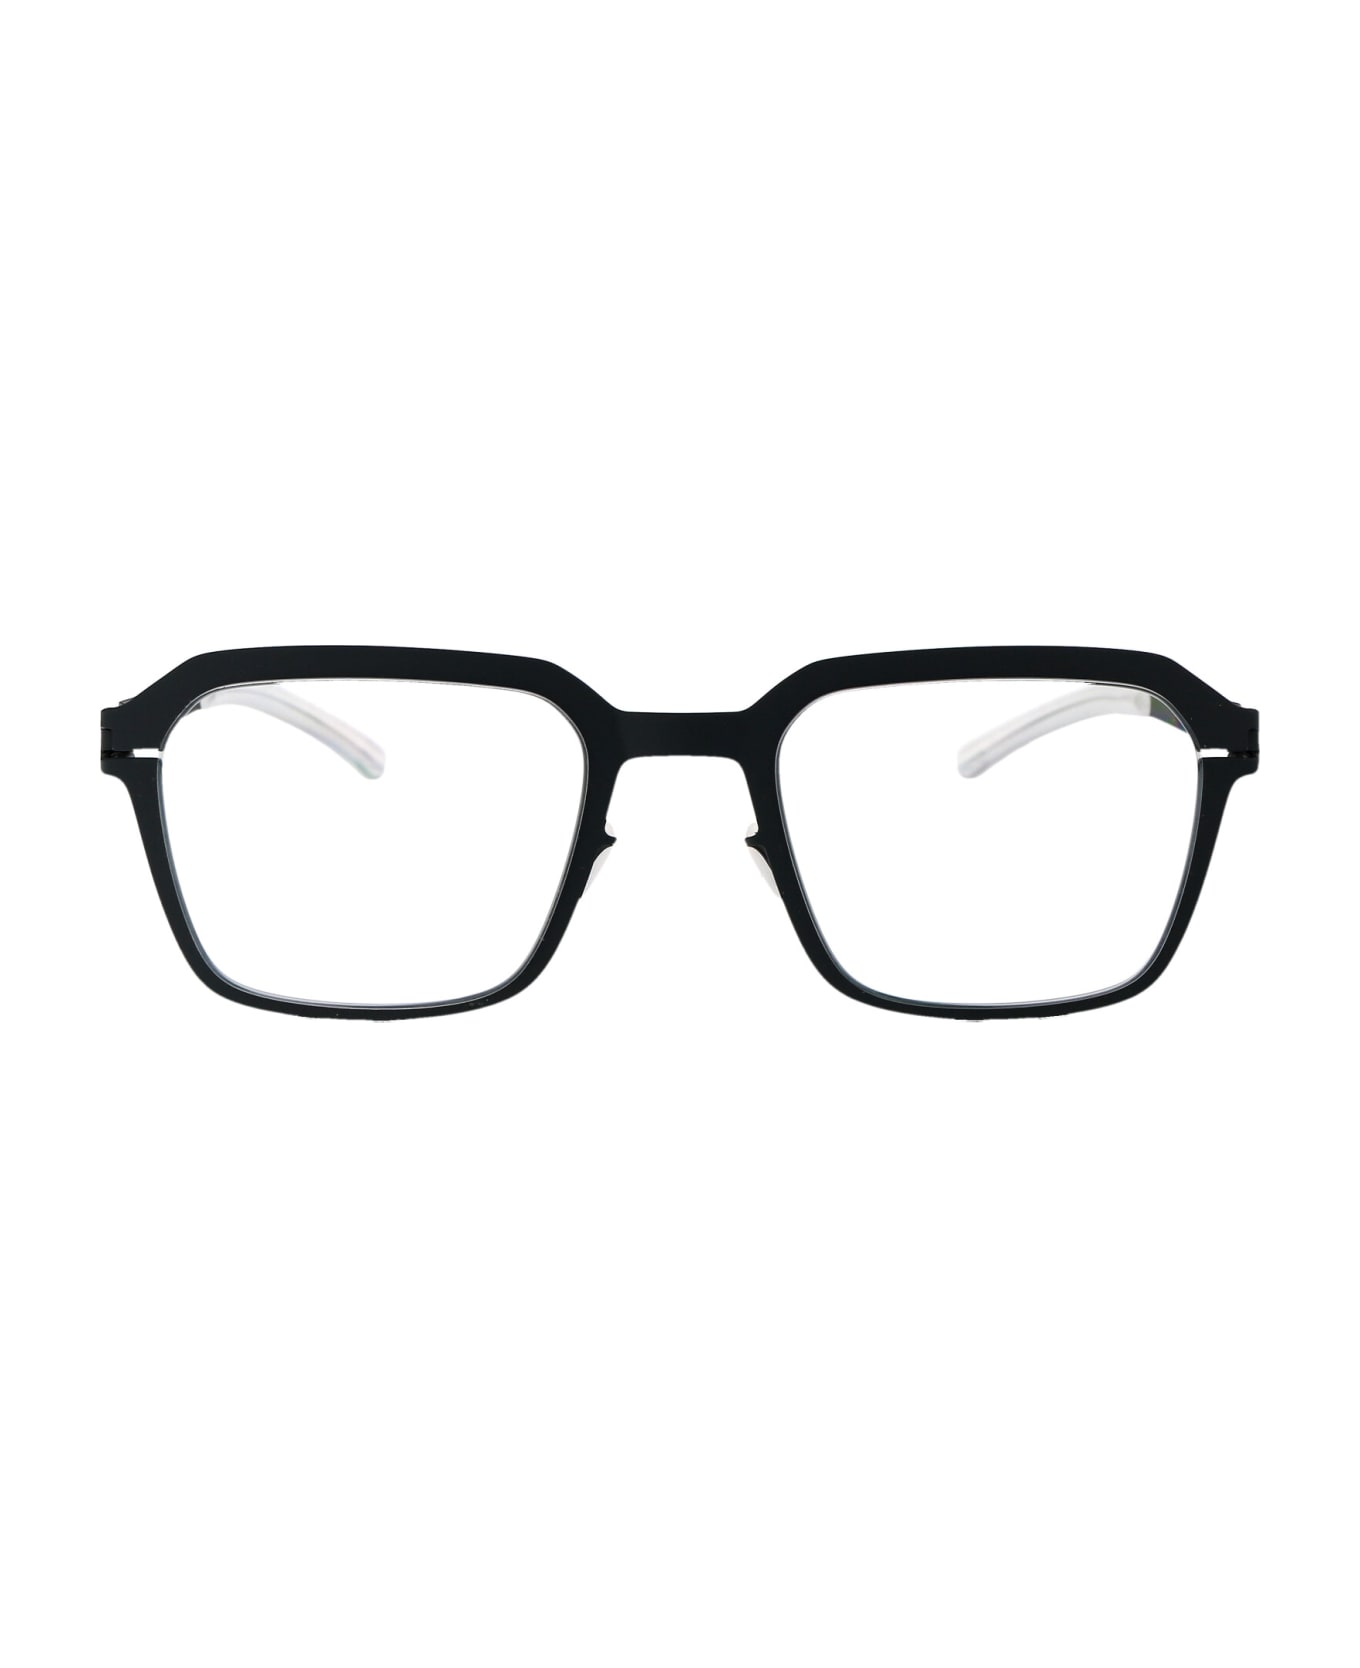 Mykita Garland Glasses - 255 INDIGO Clear